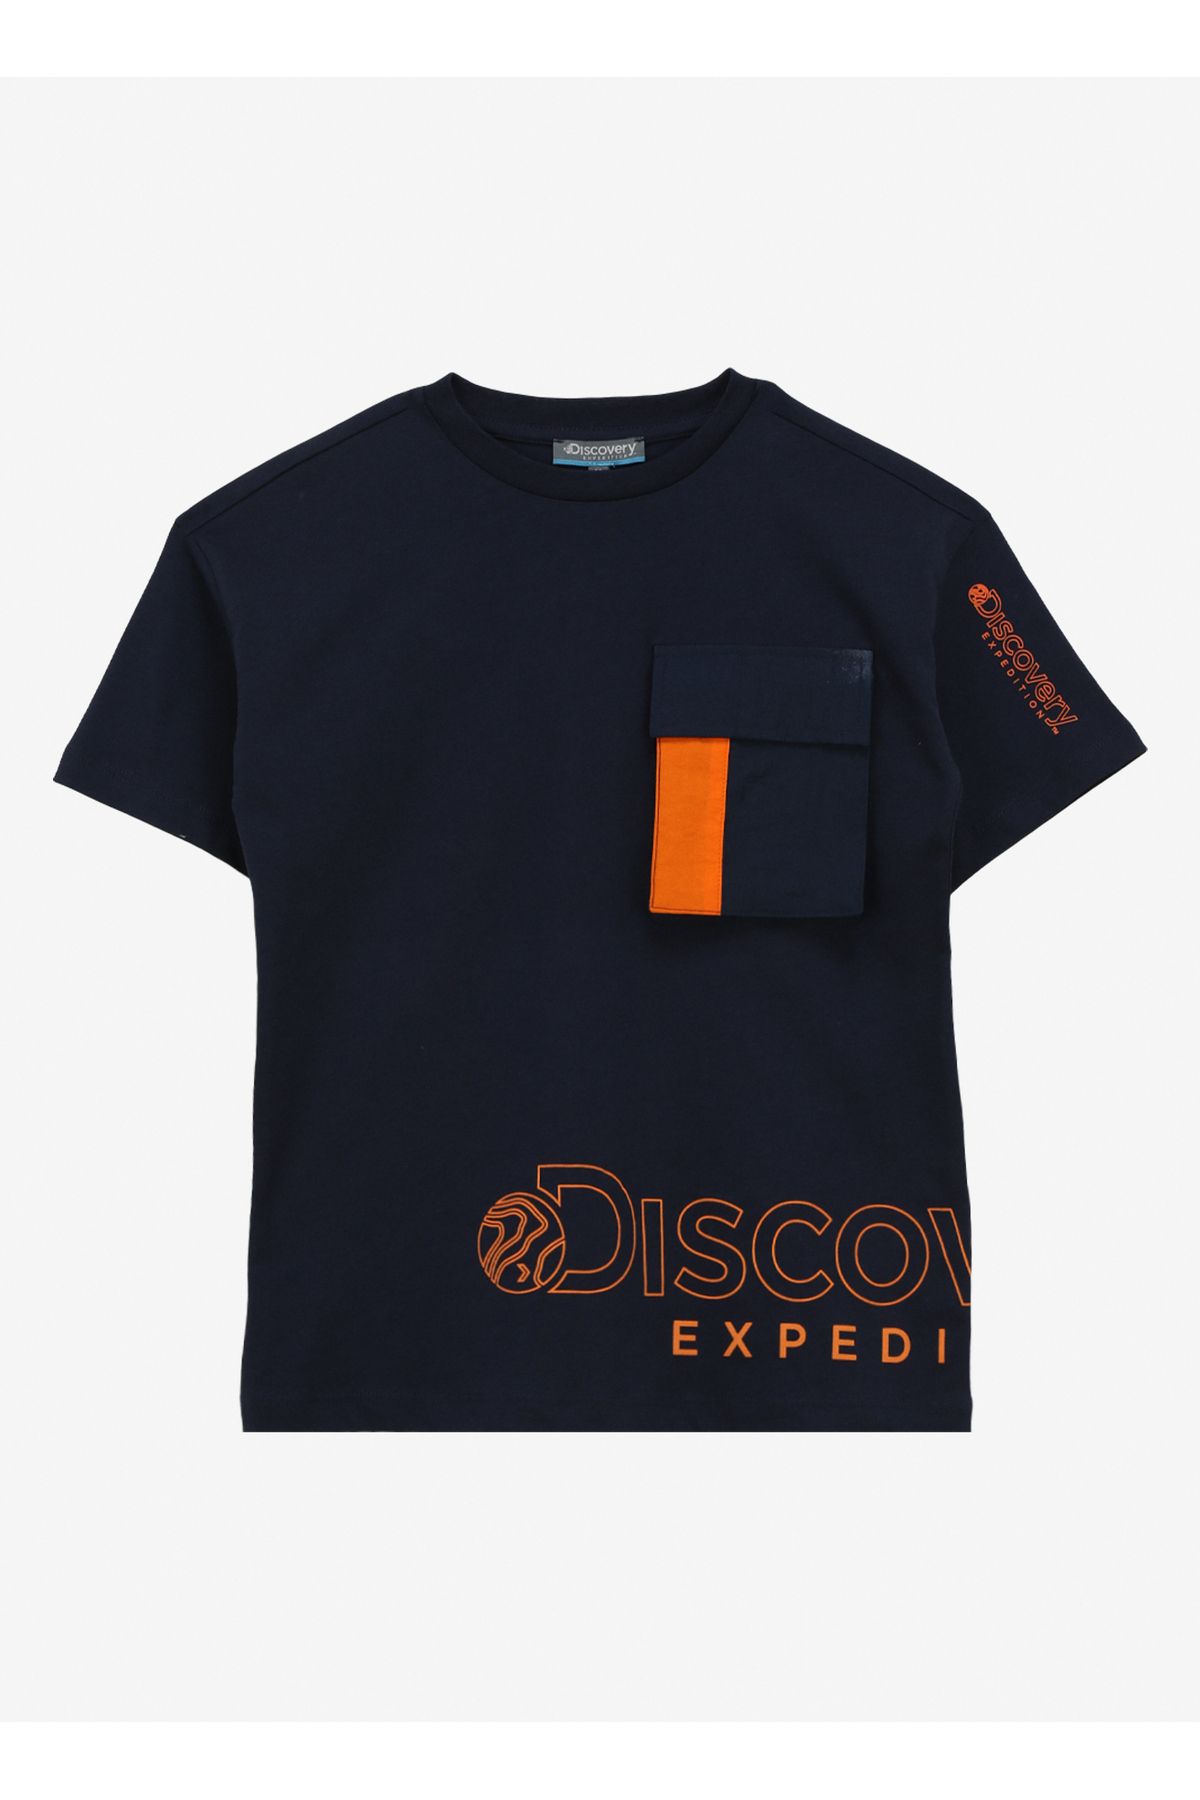 Discovery Expedition Lacivert Erkek Çocuk Bisiklet Yaka Oversize Baskılı T-shirt D4sb-tst3044